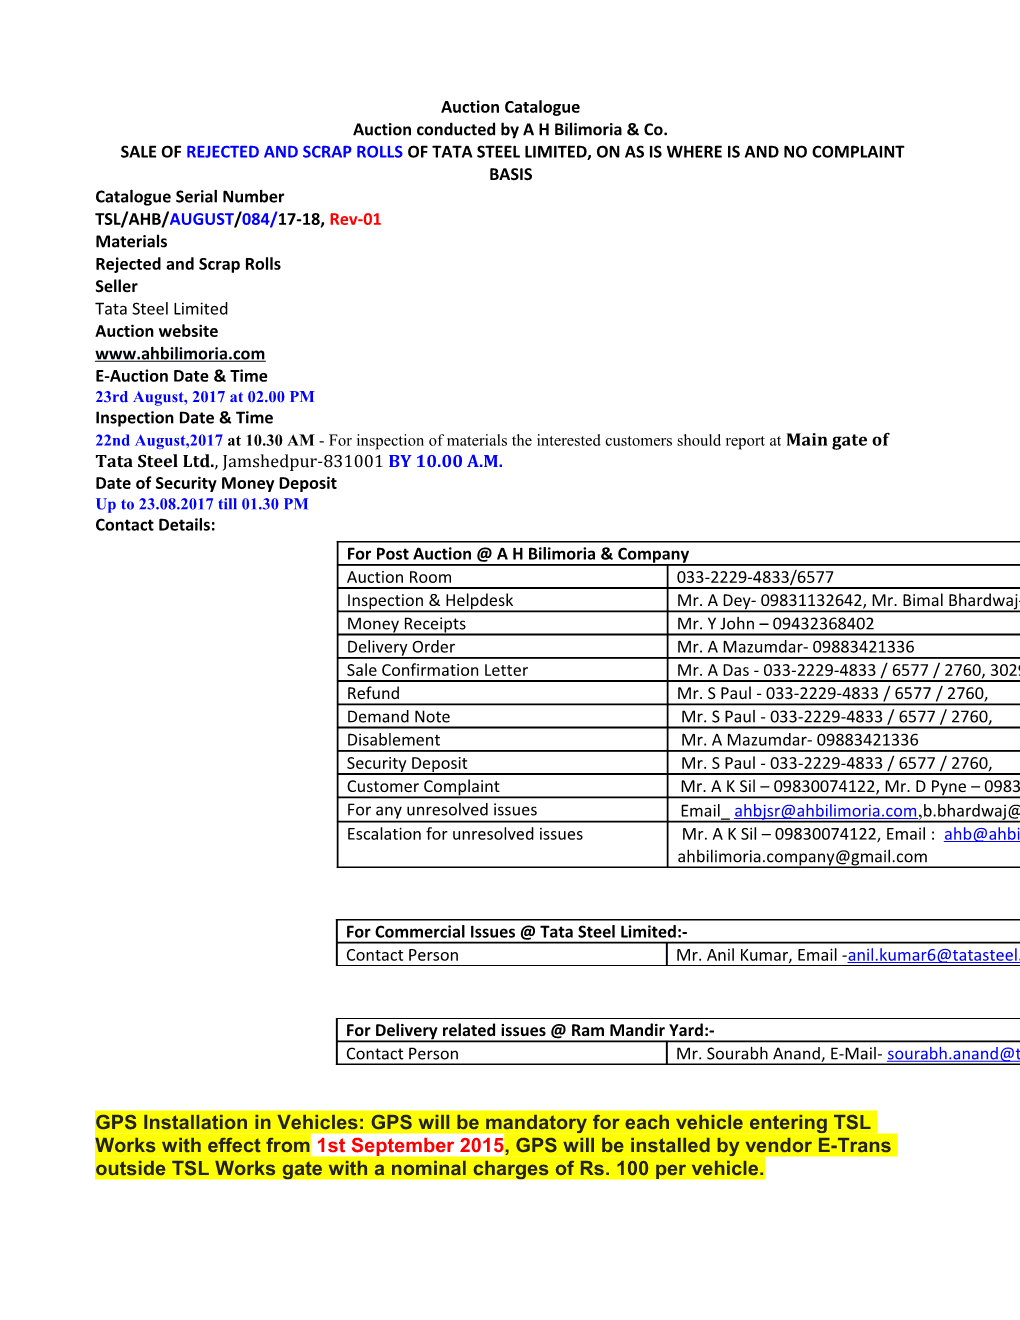 Catalogue Serial Number TSL/AHB/AUGUST/084/17-18, Rev-01